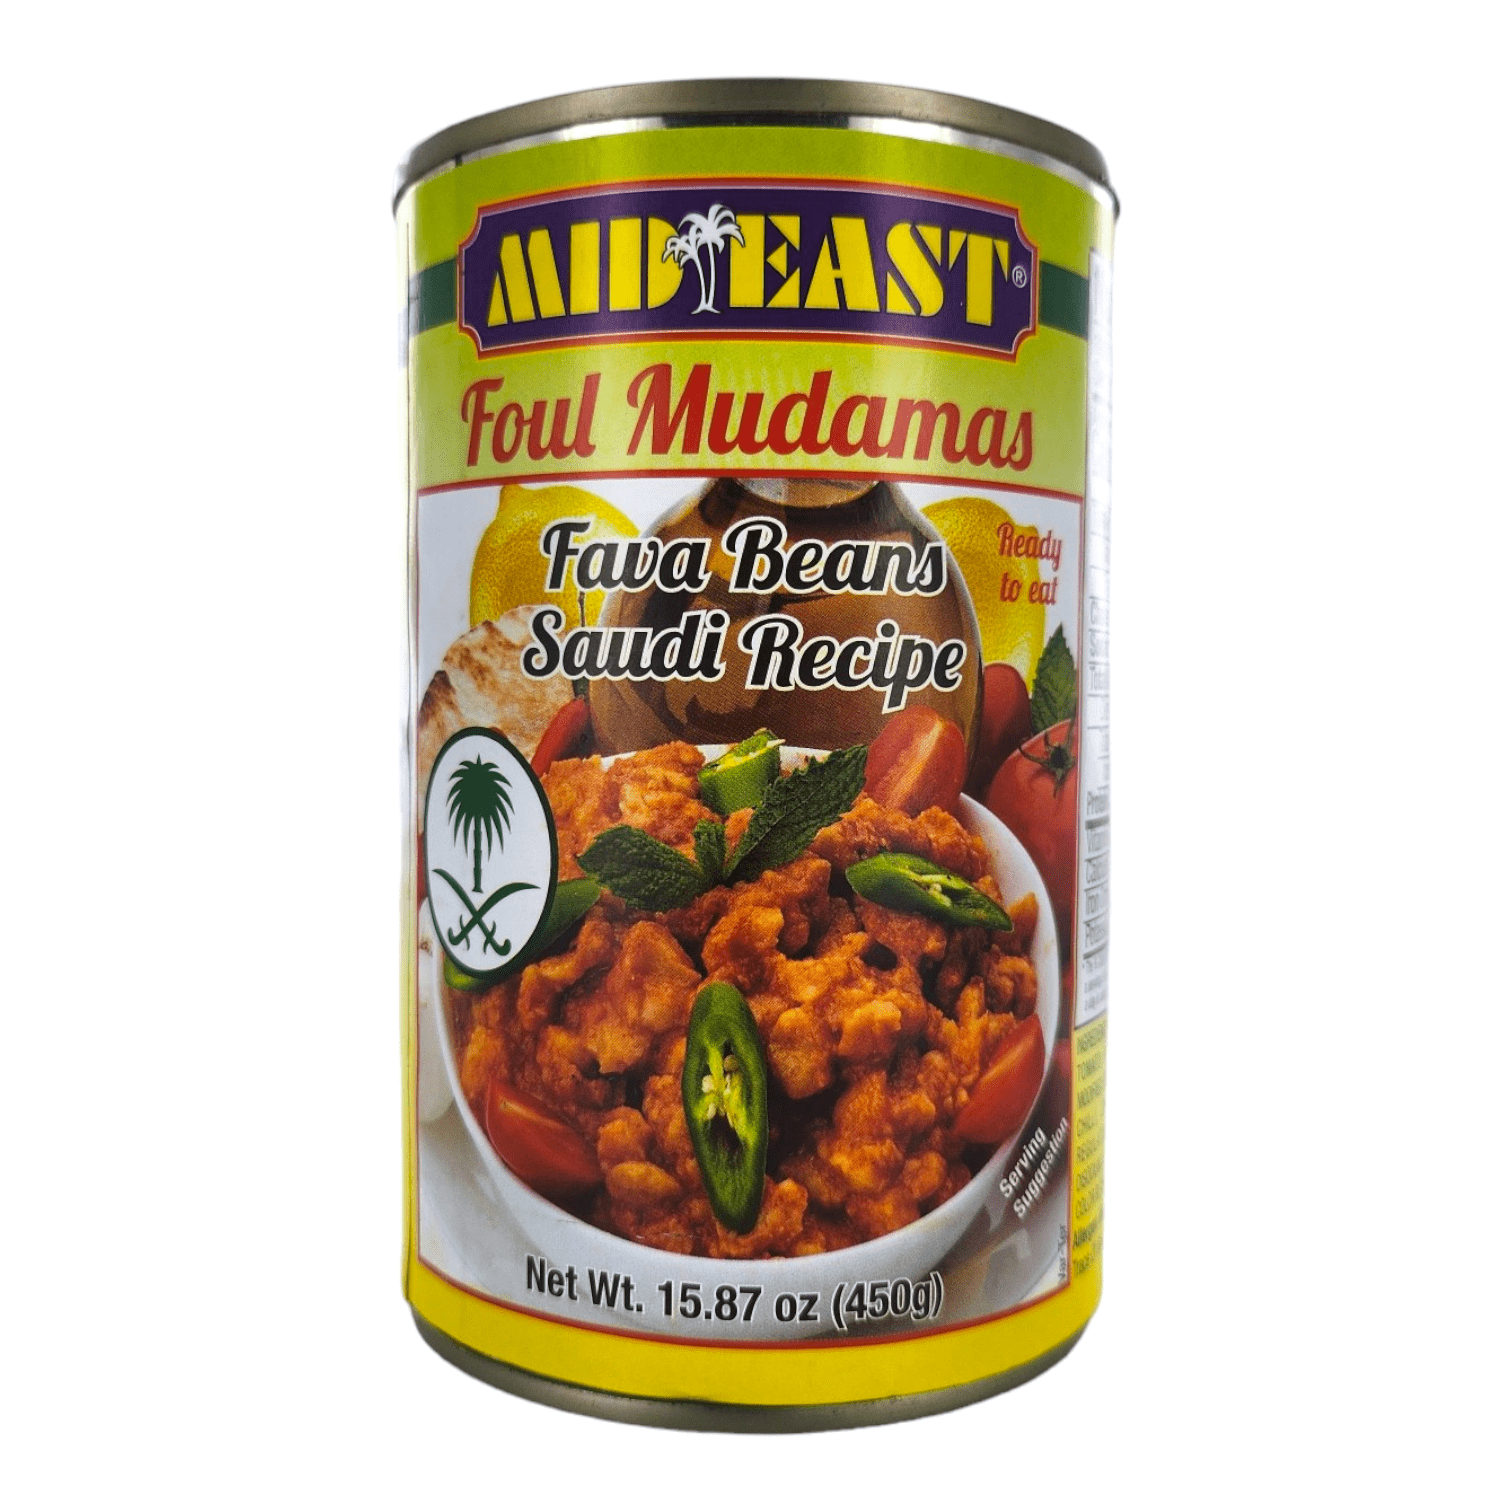 【6 Pack】Mid East Fava Beans Saudi Recipe (Foul Mudamas) 15.57 oz (450g) - Mideast Grocers